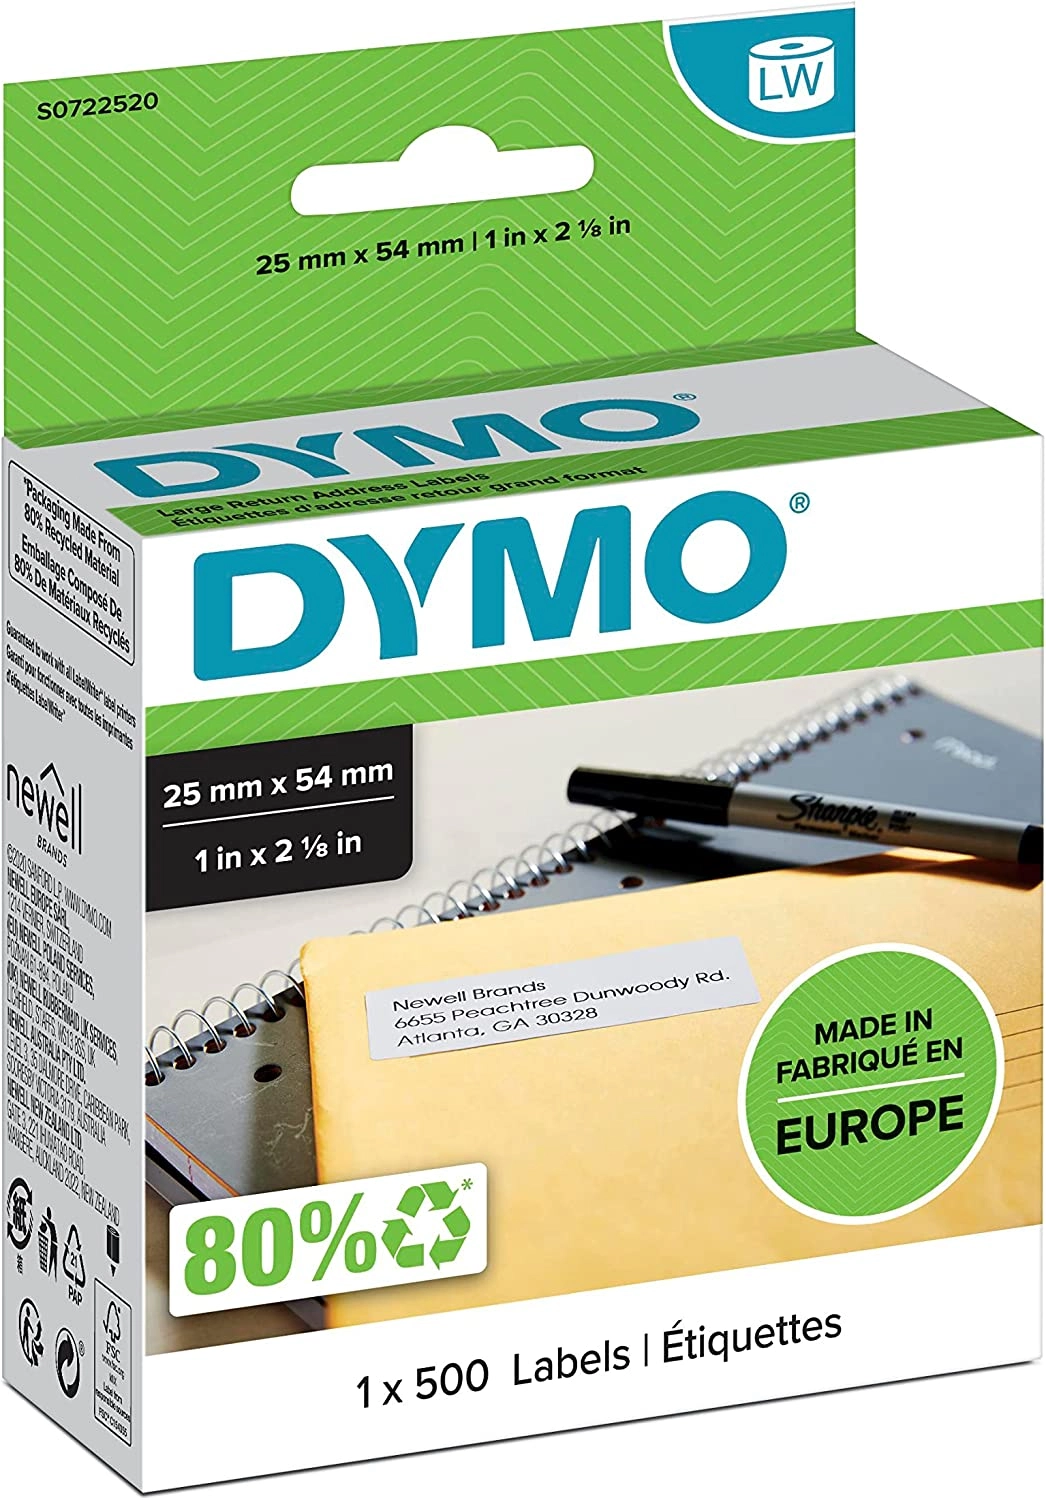 S0722550 Dymo LW 19mm x 51mm 500 Labels per Roll